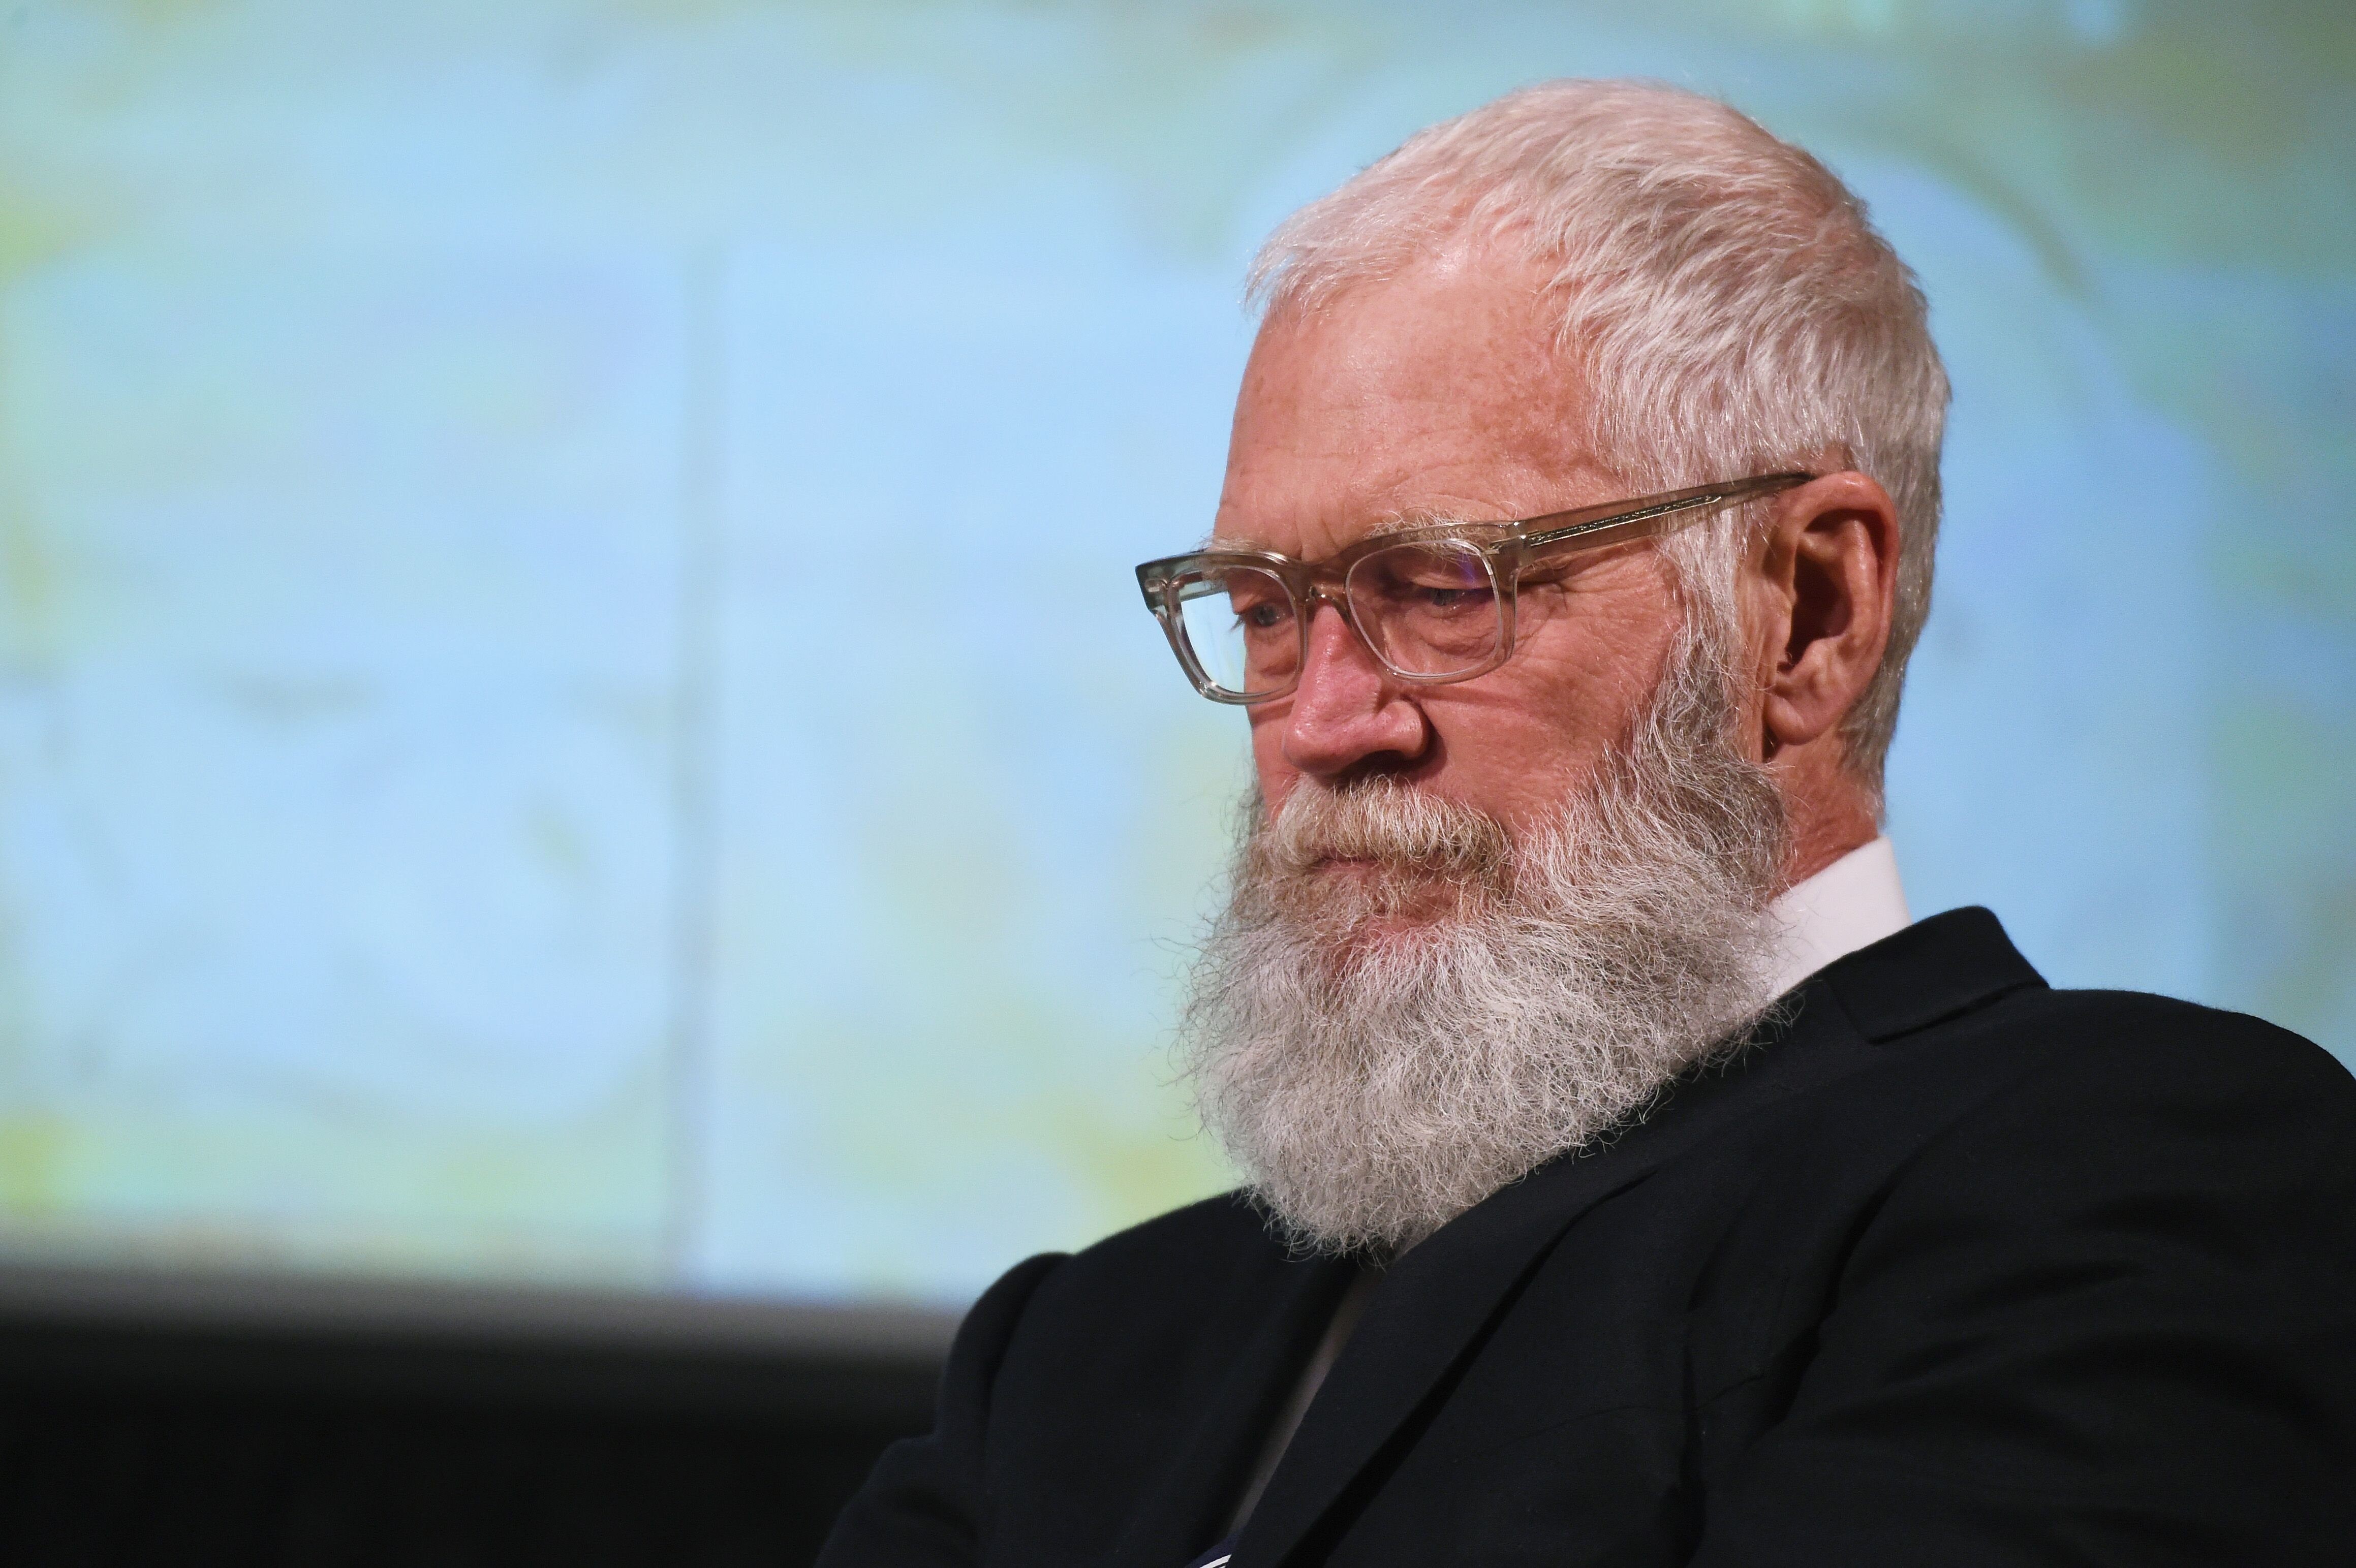 A portrait of David Letterman | Source: Getty Images/GlobalImagesUkraine